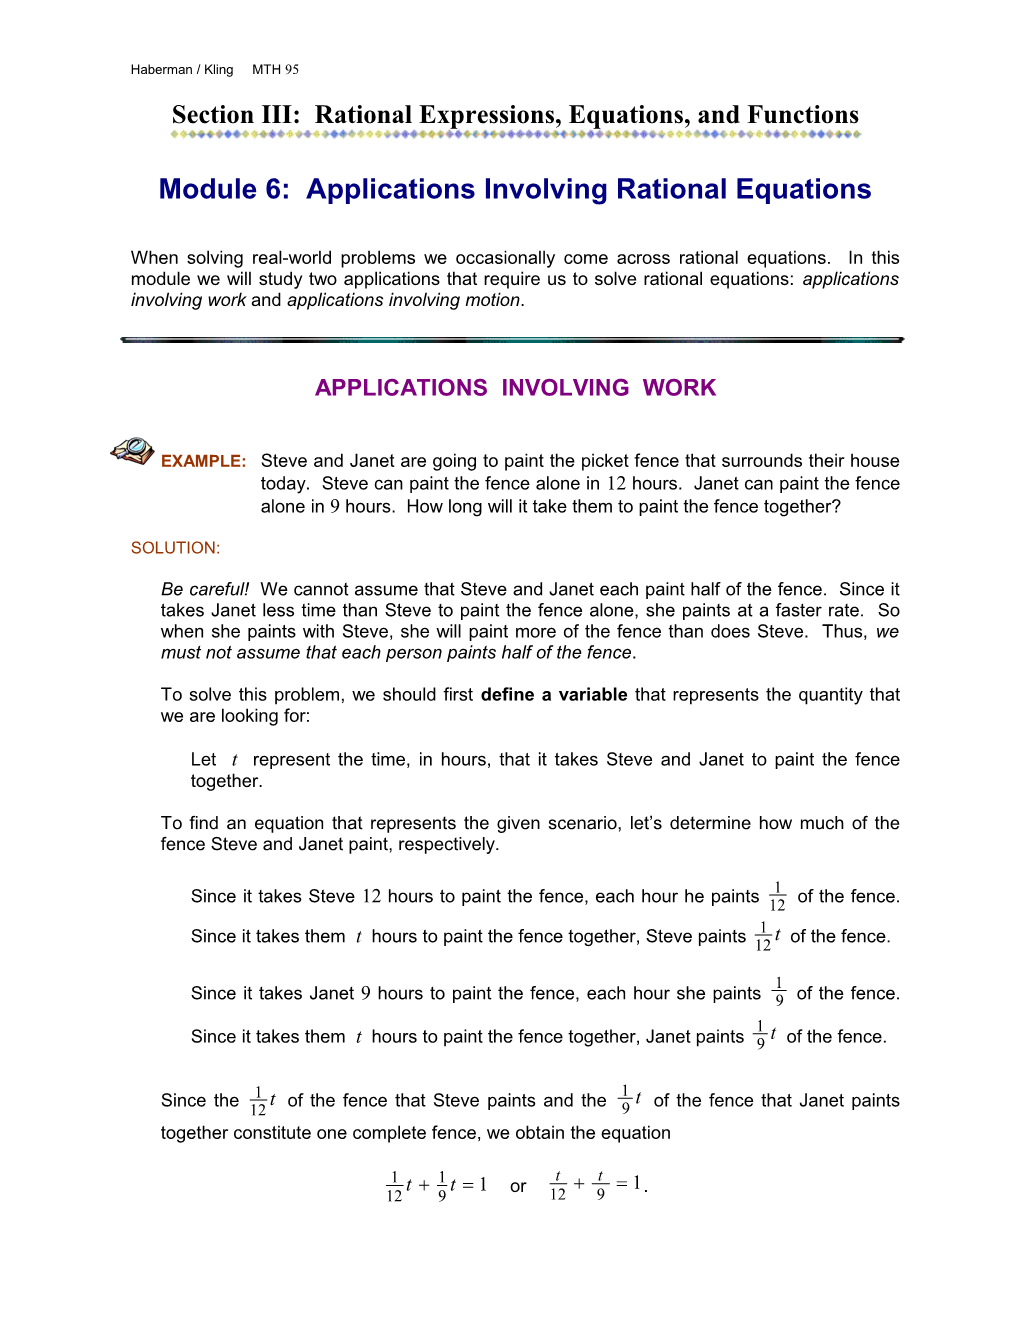 Module 6: Applications Involving Rational Equations